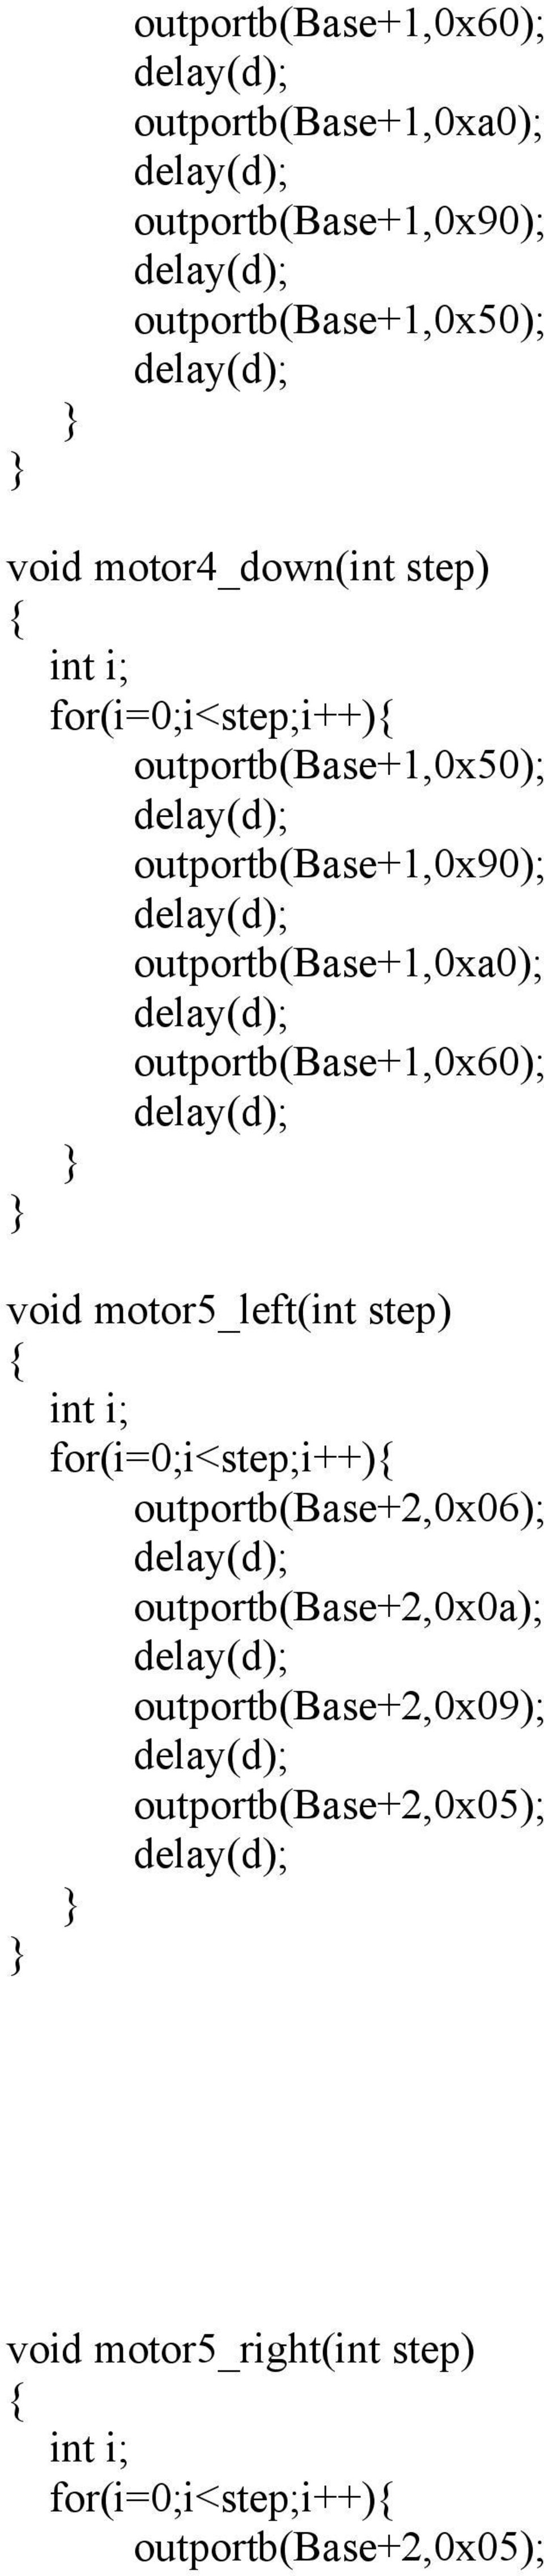 outportb(base+1,0x60); void motor5_left(int step) int i; for(i=0;i<step;i++) outportb(base+2,0x06);